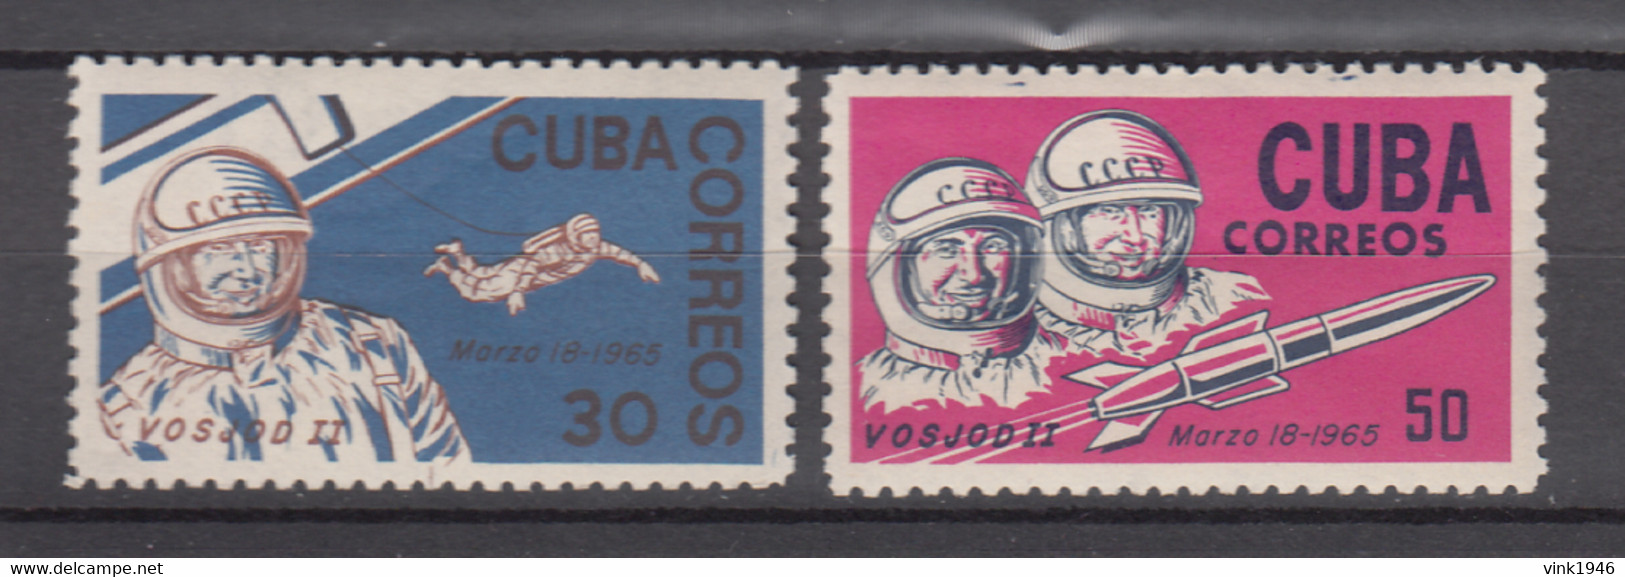 Cuba 1965,2V In Set,space,aerospace,ruimtevaart,luft Und Raumfahrt,de L'aérospatiale,MNH/Postfris(A3907) - América Del Norte